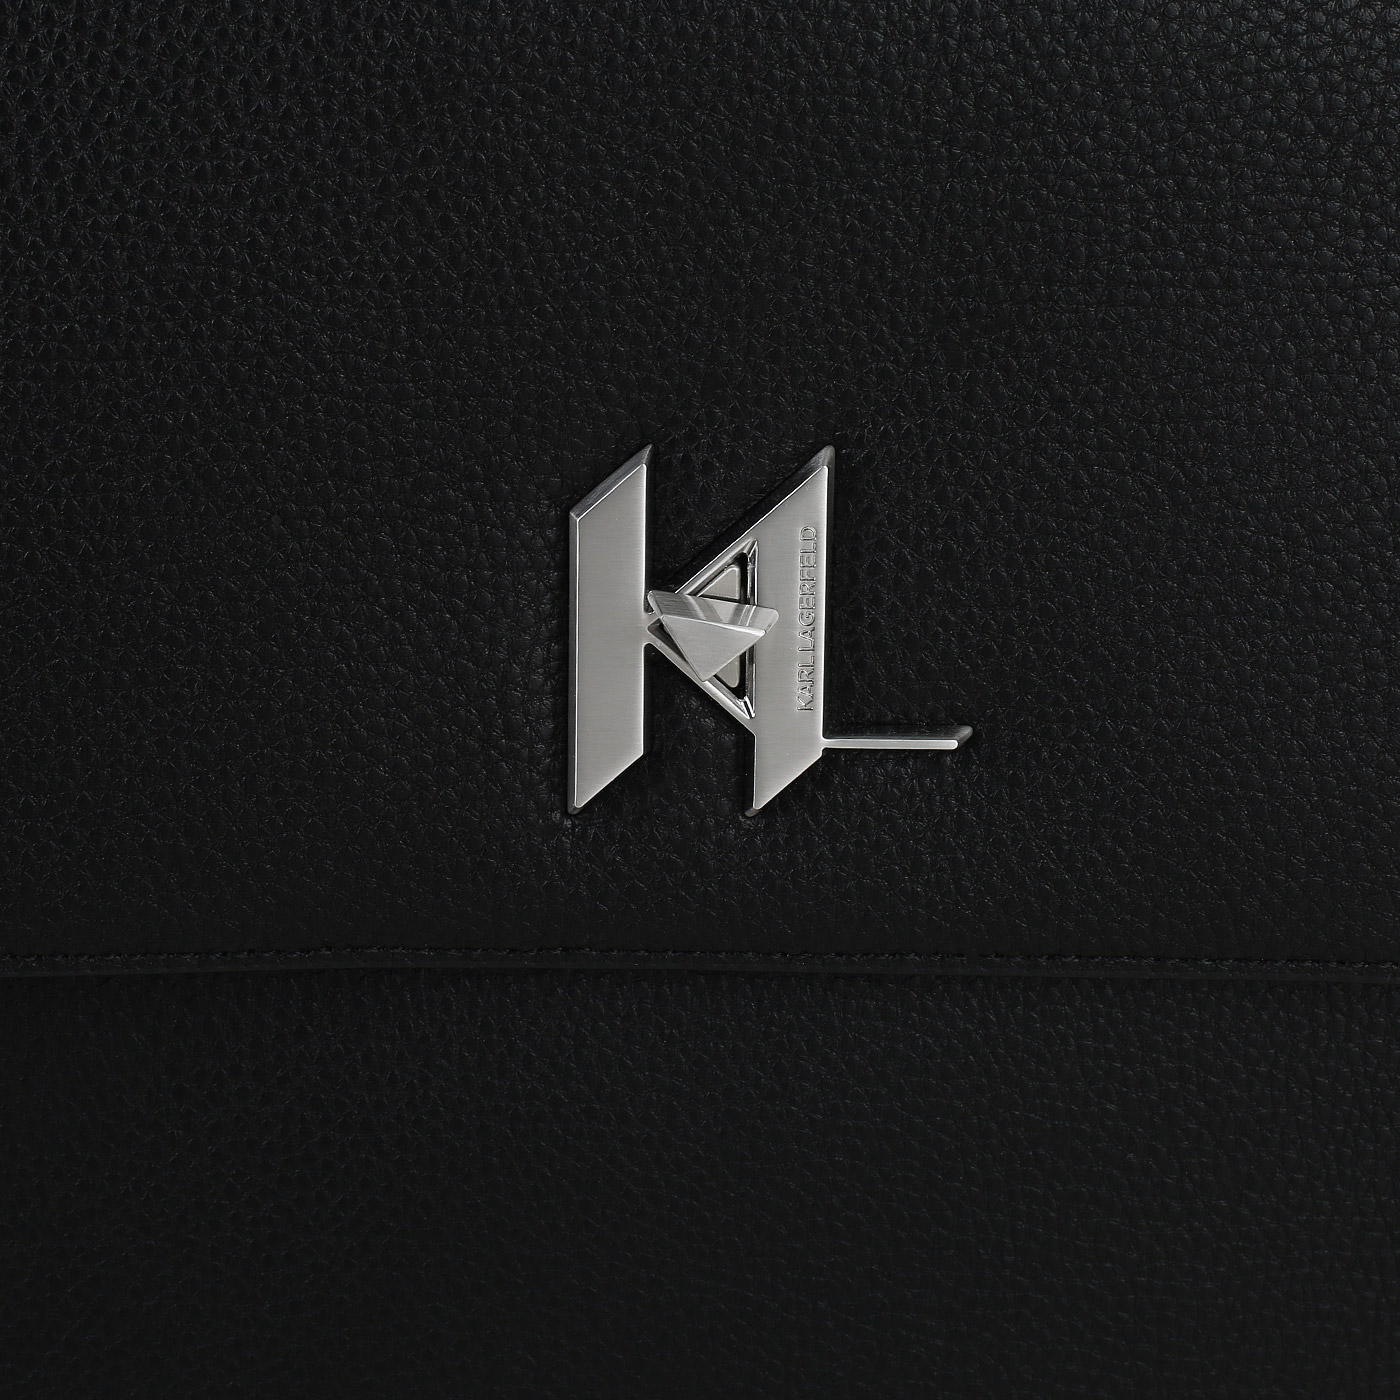 Кожаный портфель через плечо Karl Lagerfeld Turnlock